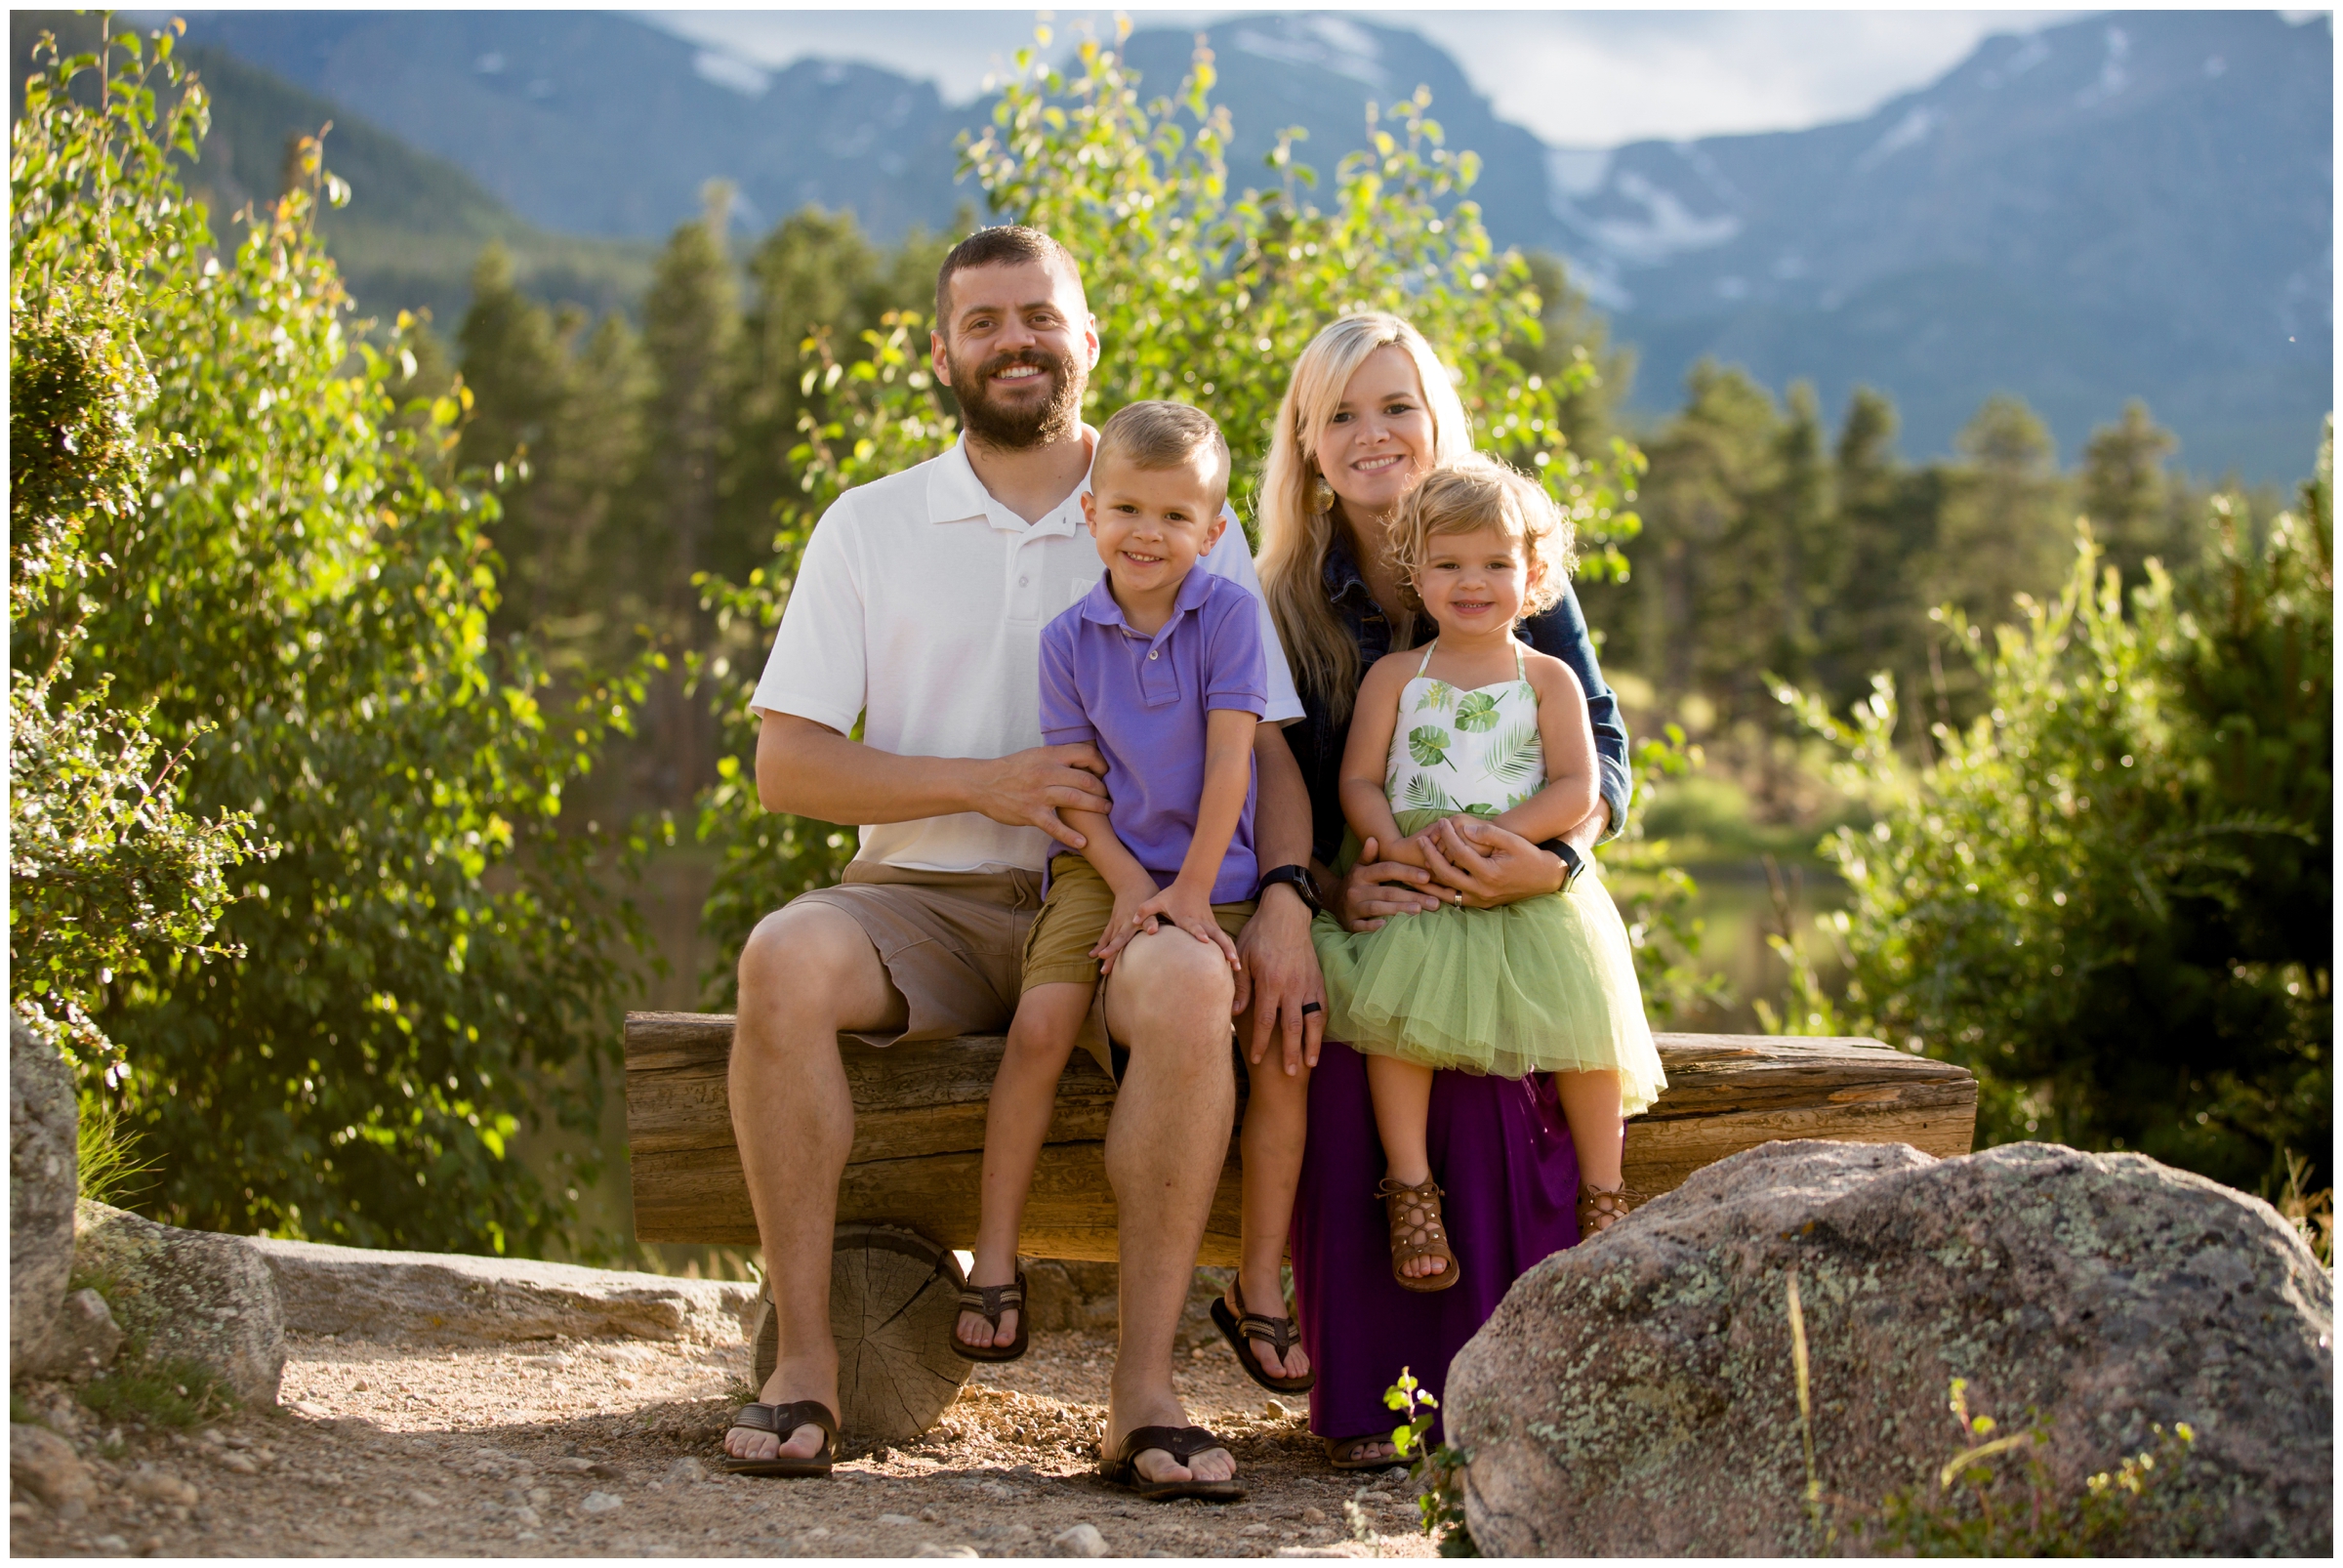 Estes Park family portraits at Sprague Lake RMNP by Colorado photographer Plum Pretty Photography